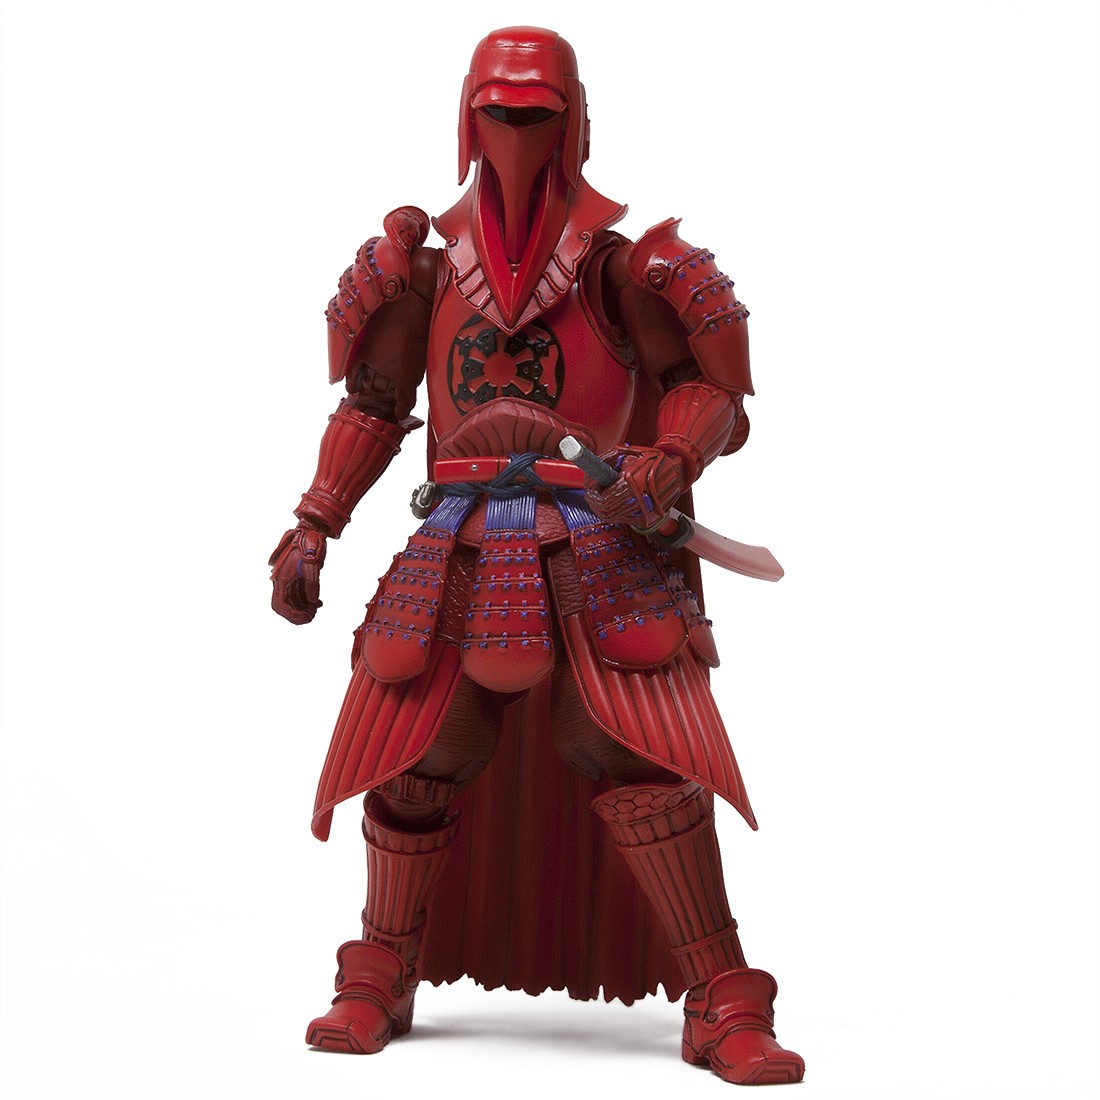 Bandai Meisho Movie Realization Star Wars Akazonae Royal Guard Figure (red)